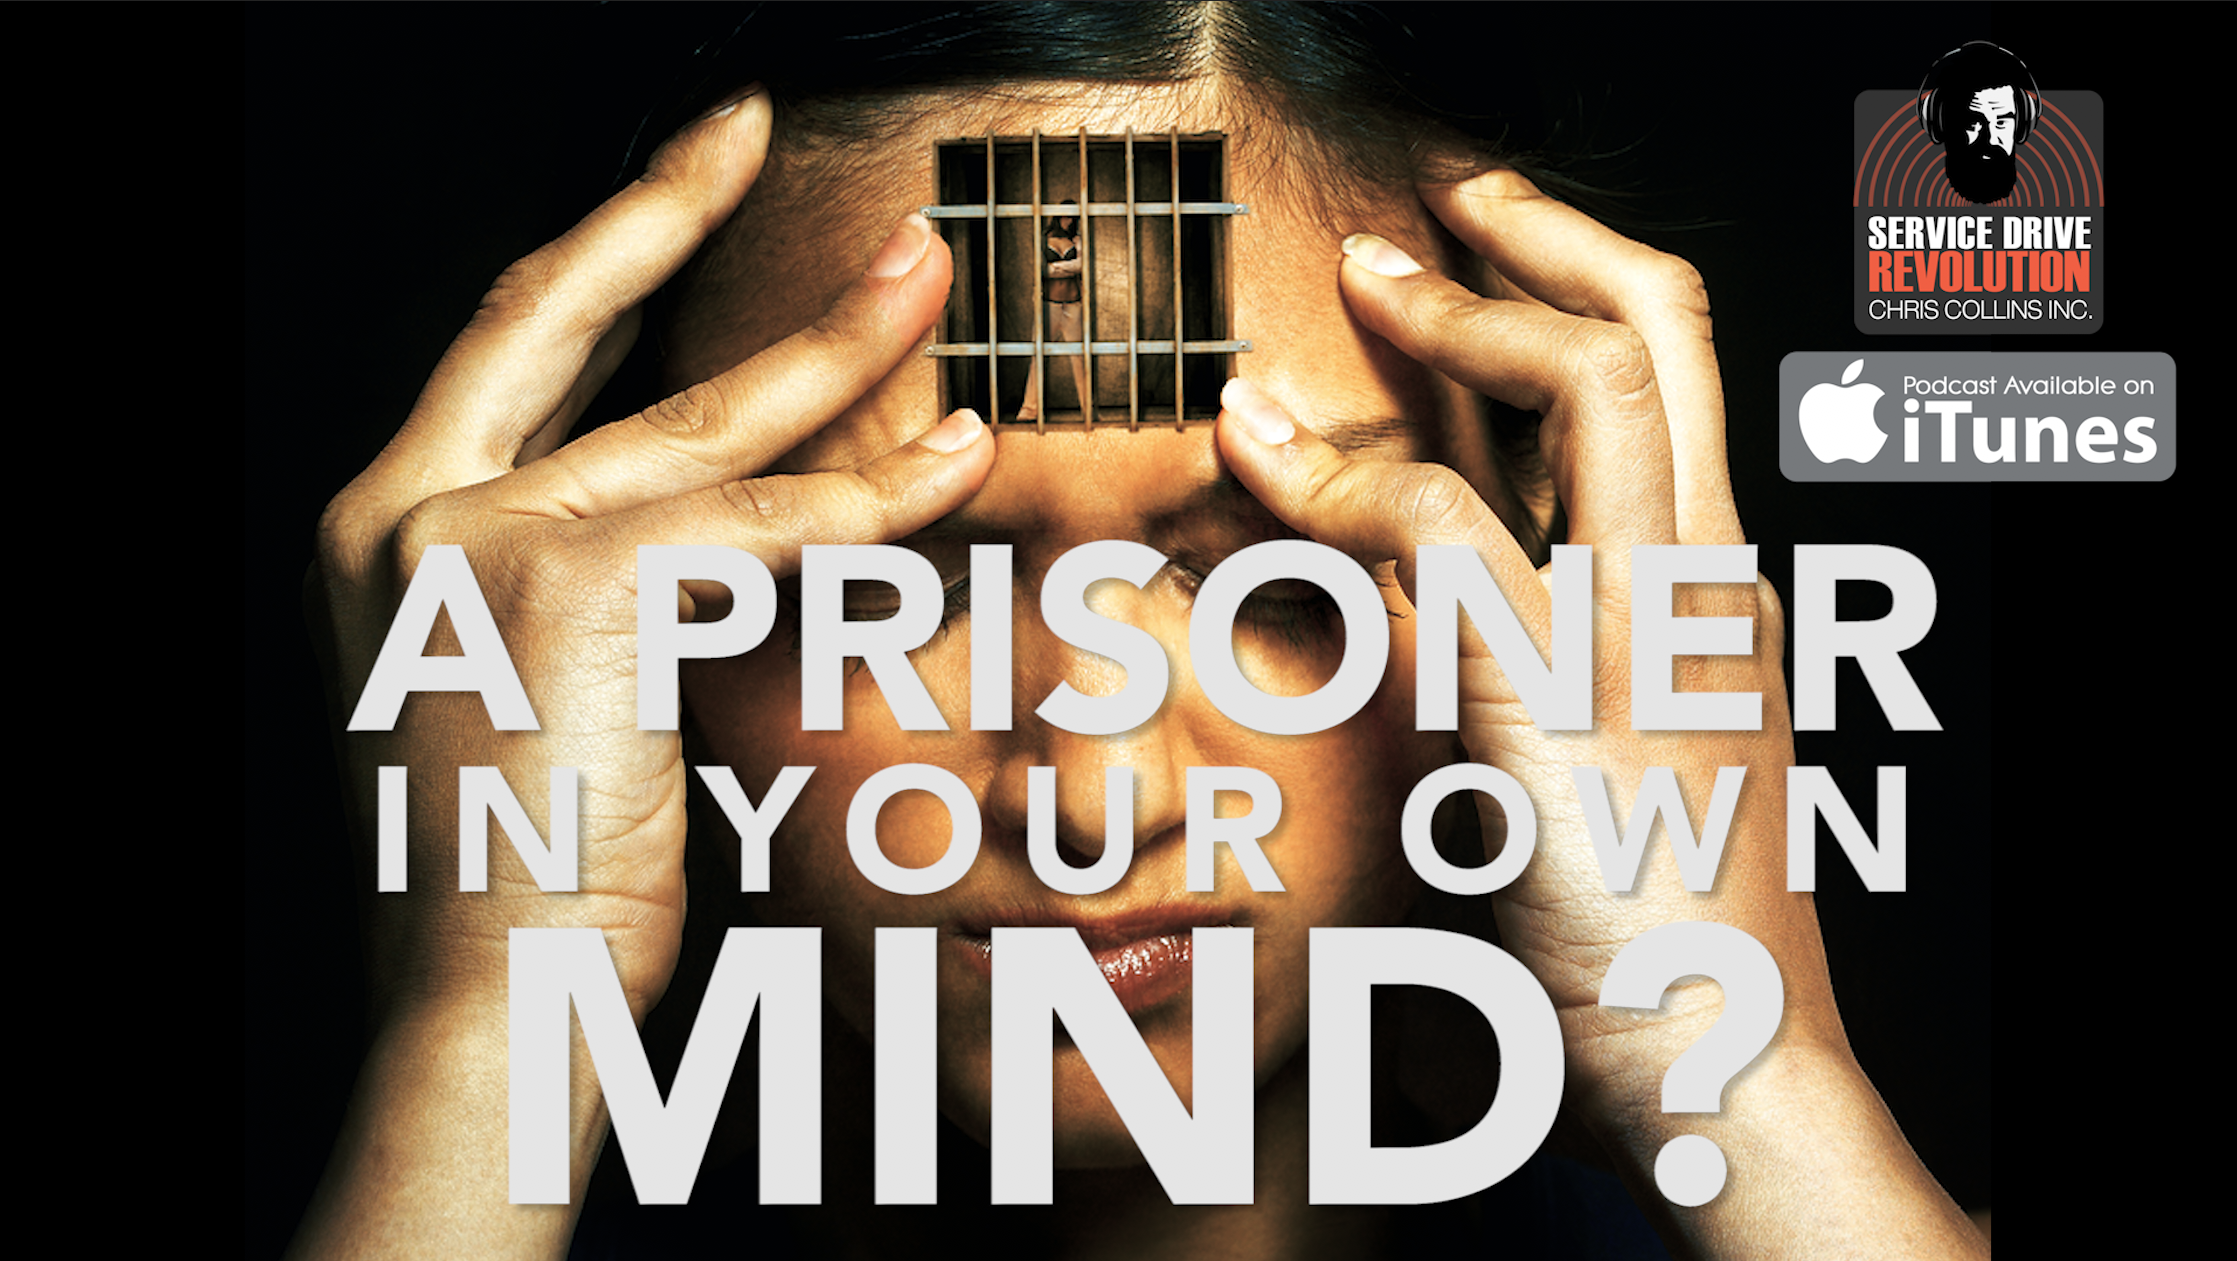 A Prisoner in your own mind?